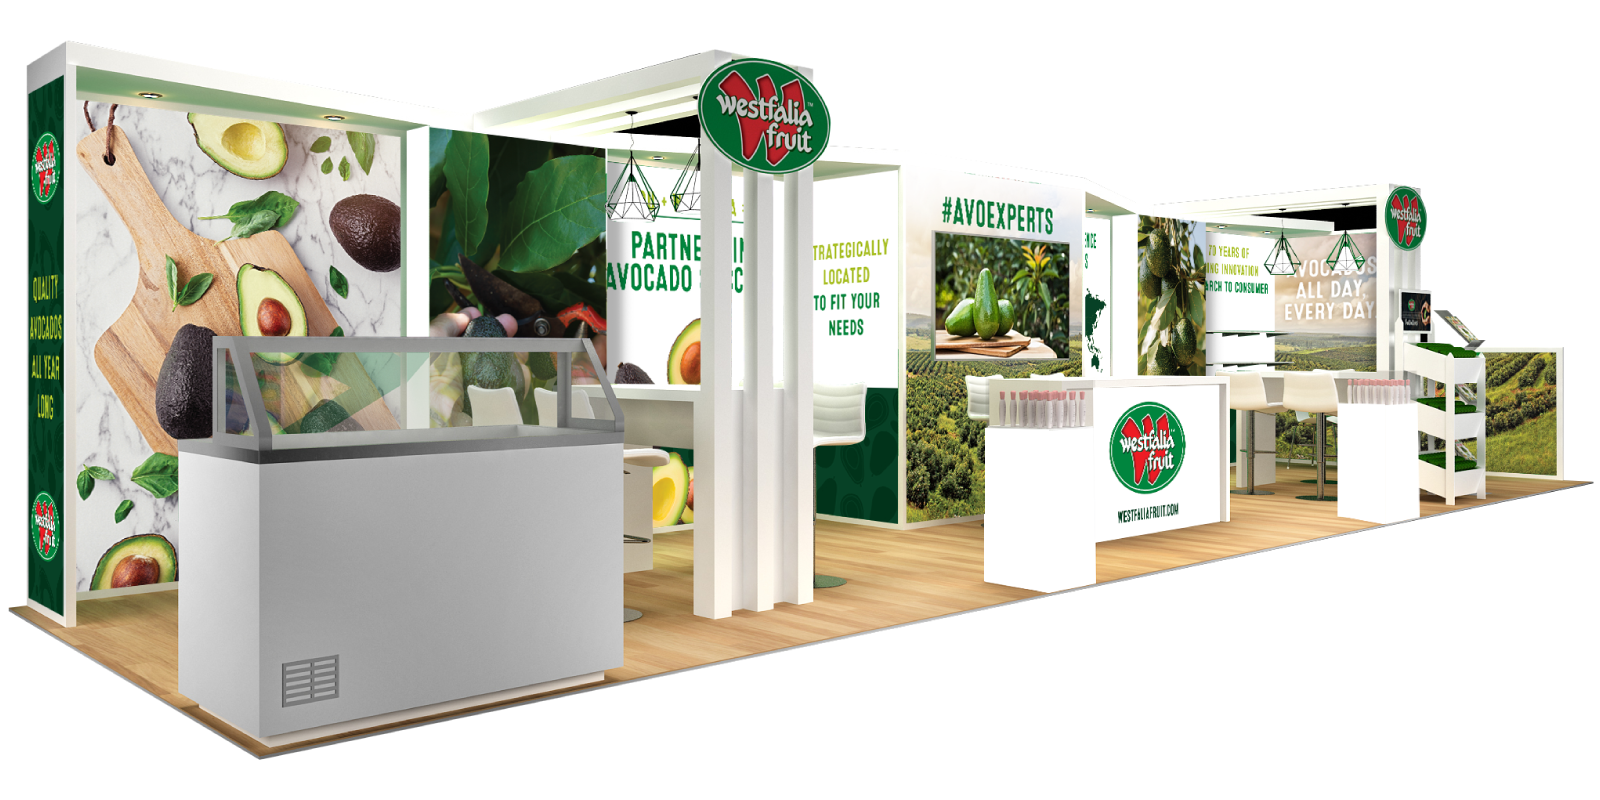 Westfalia Fruit trade show booth mockup